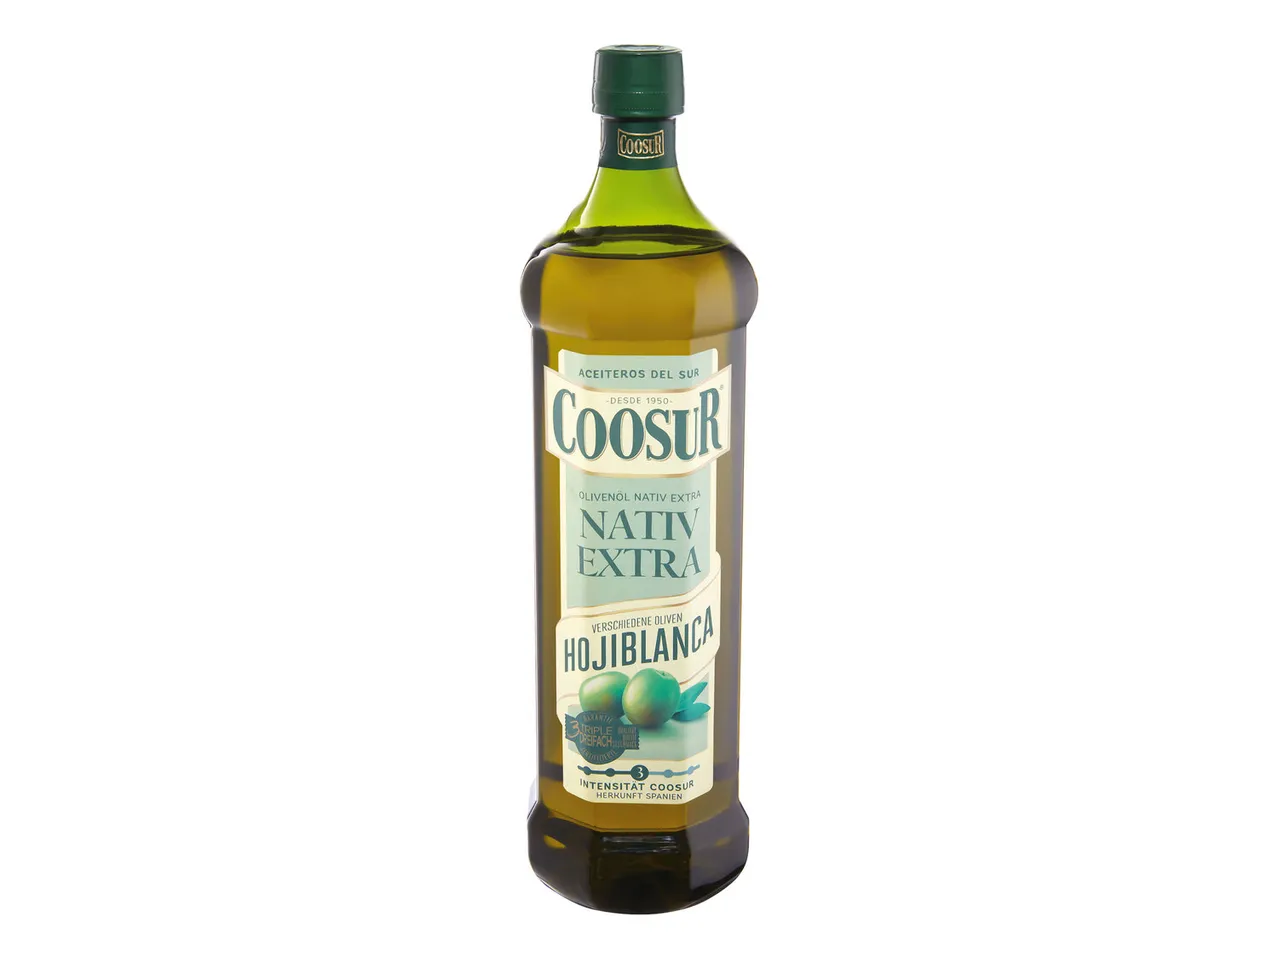 Hojiblanca Olivenöl Coosur